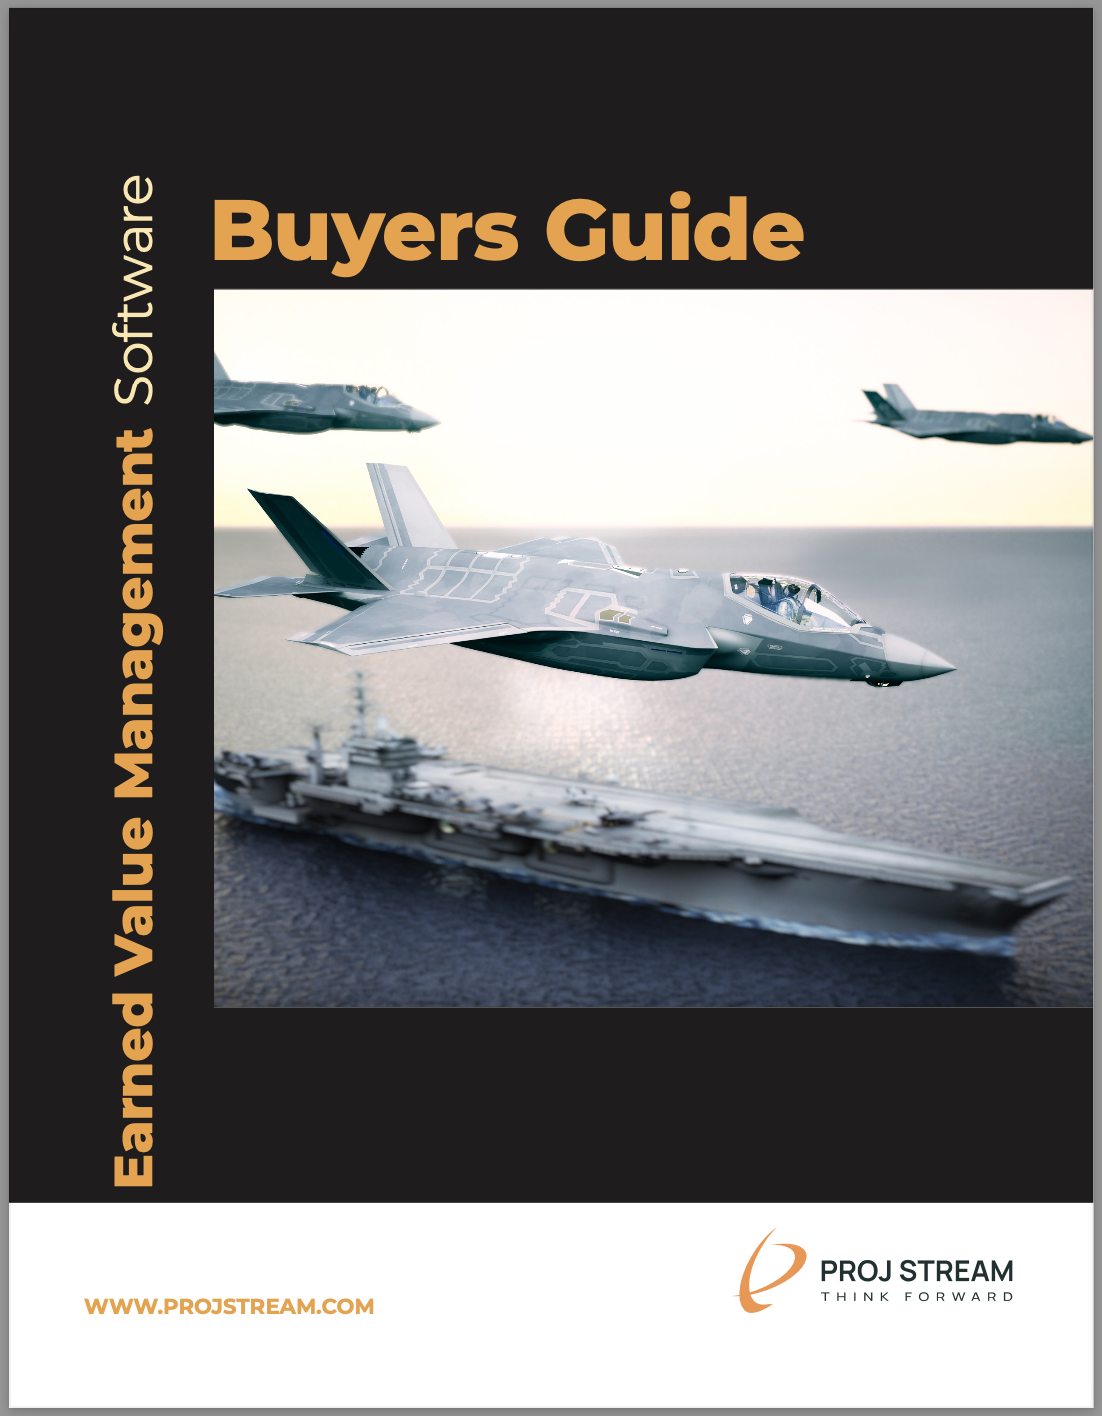 evm-software-buyers-guide TN